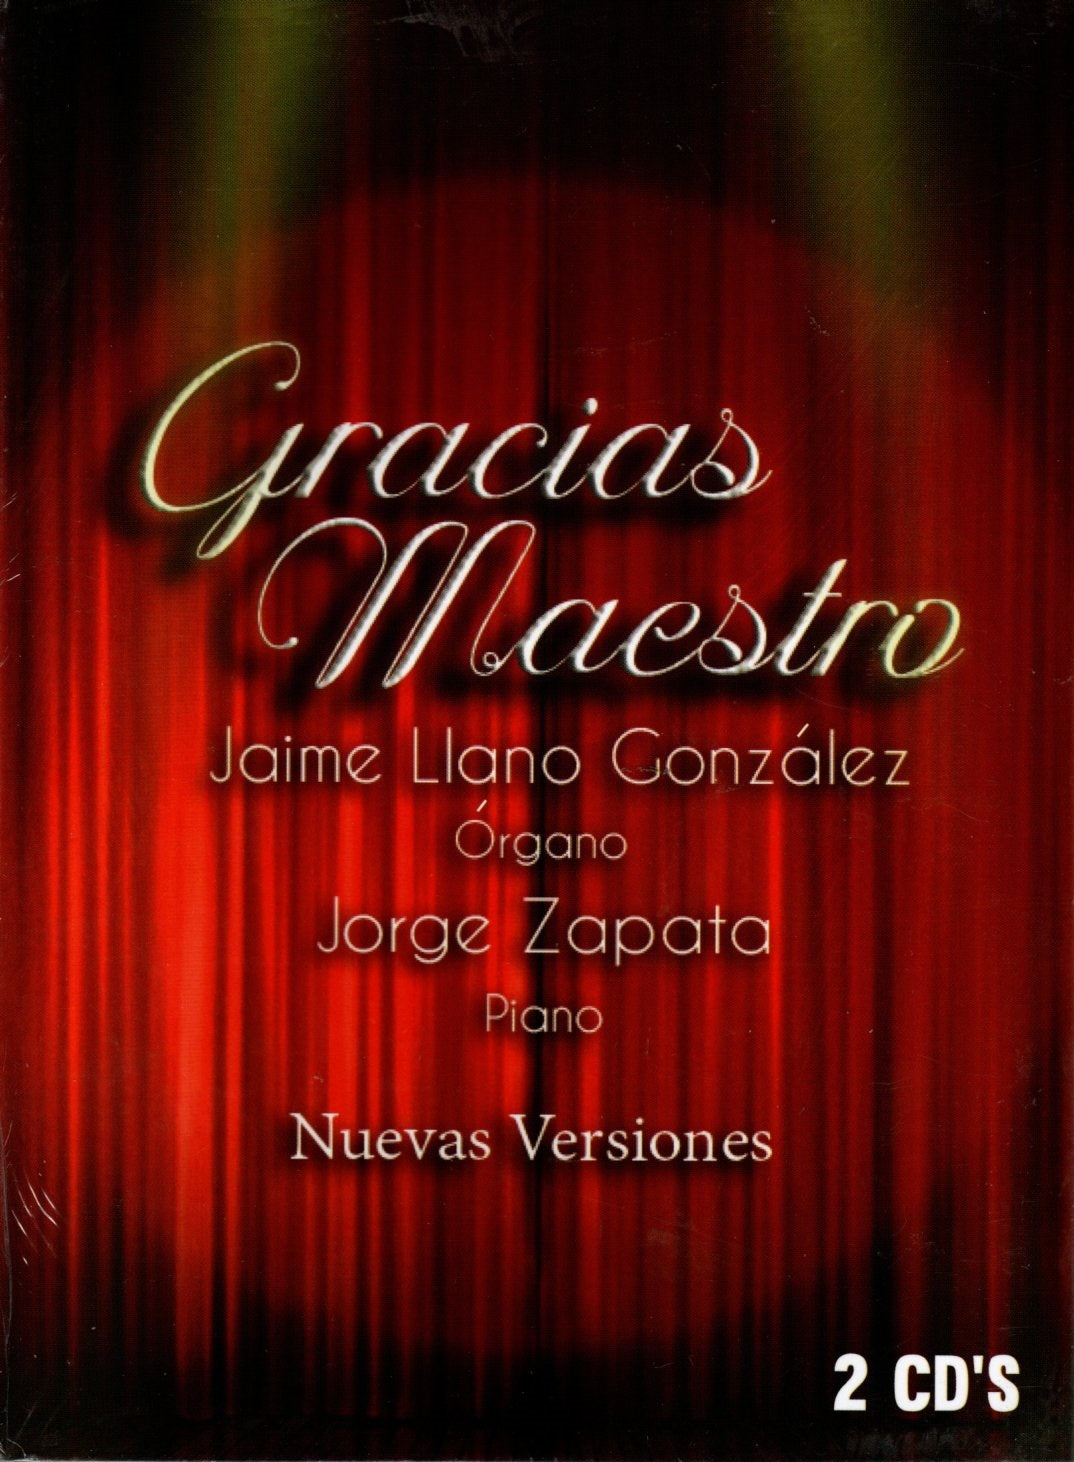 CD X2 Jaime Llano González / Jorge Zapata - Gracias Maestro